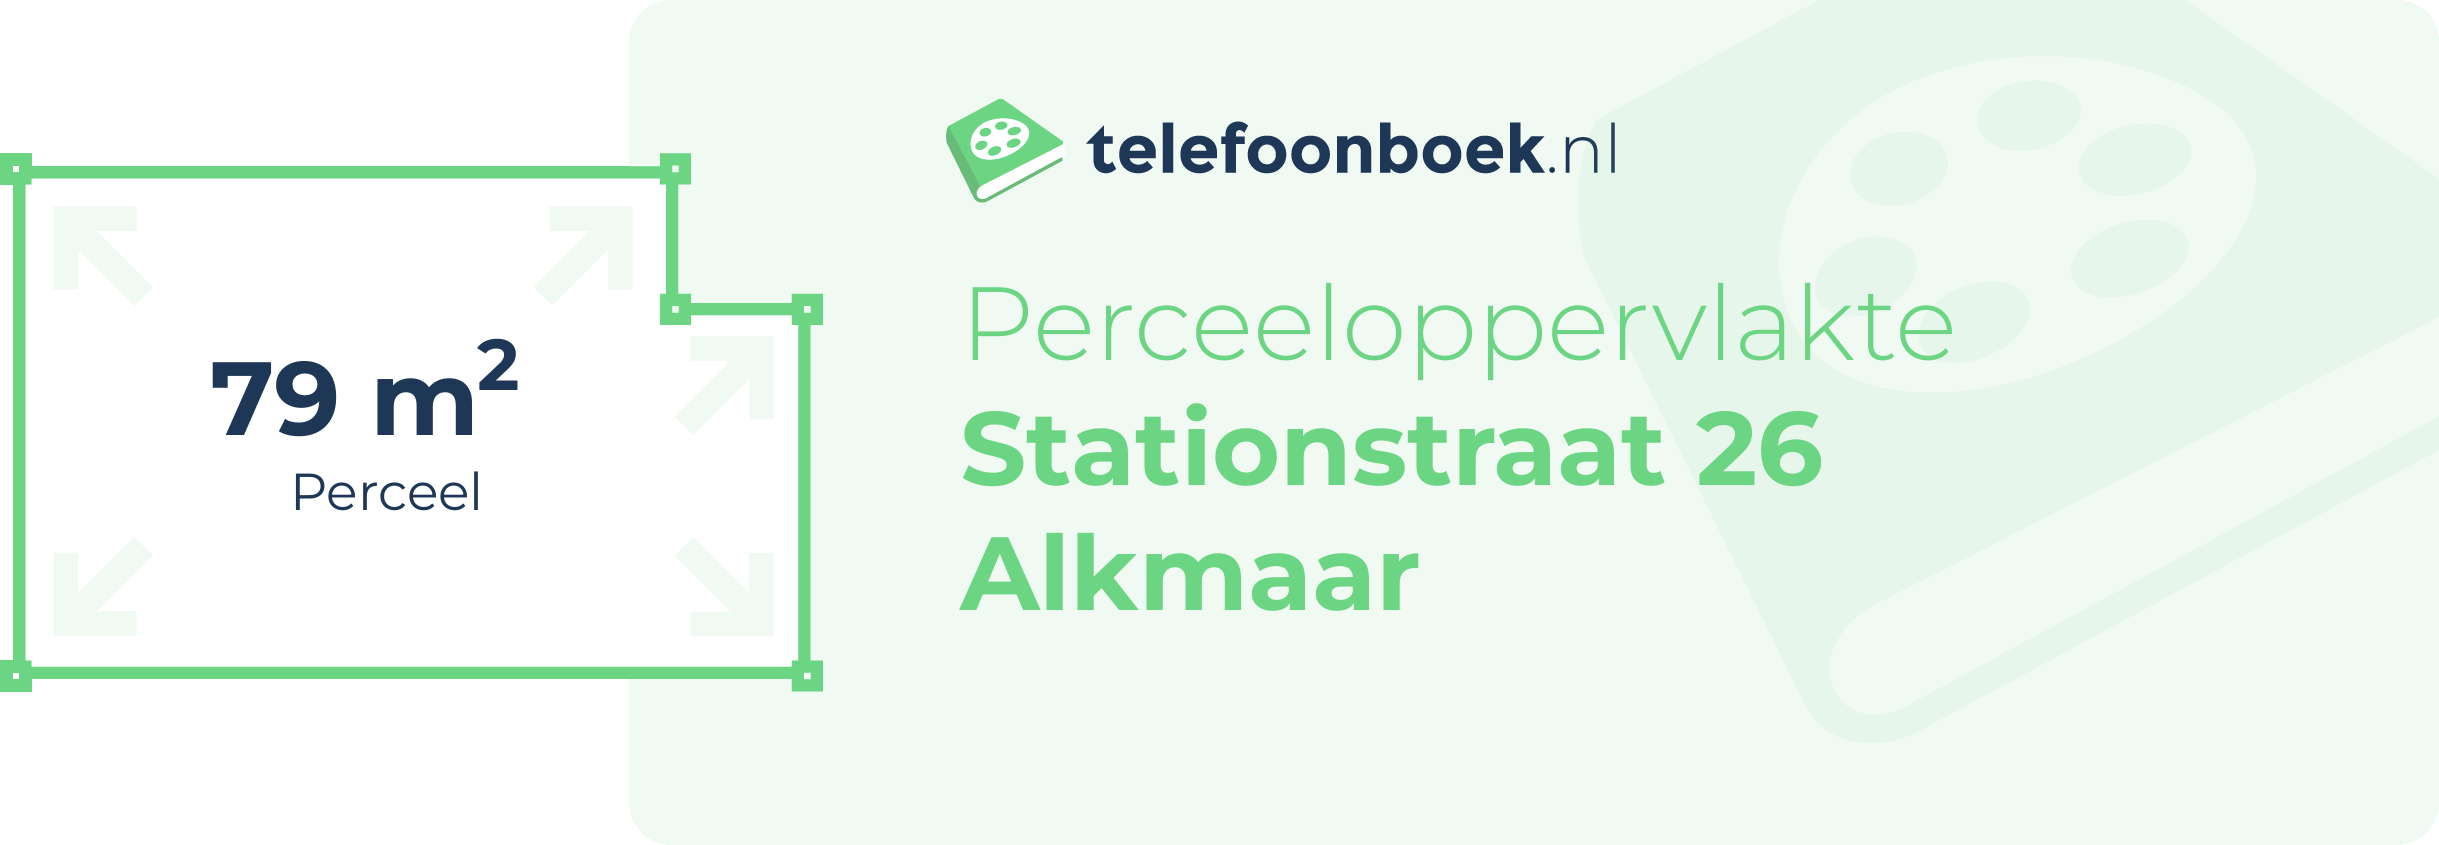 Perceeloppervlakte Stationstraat 26 Alkmaar